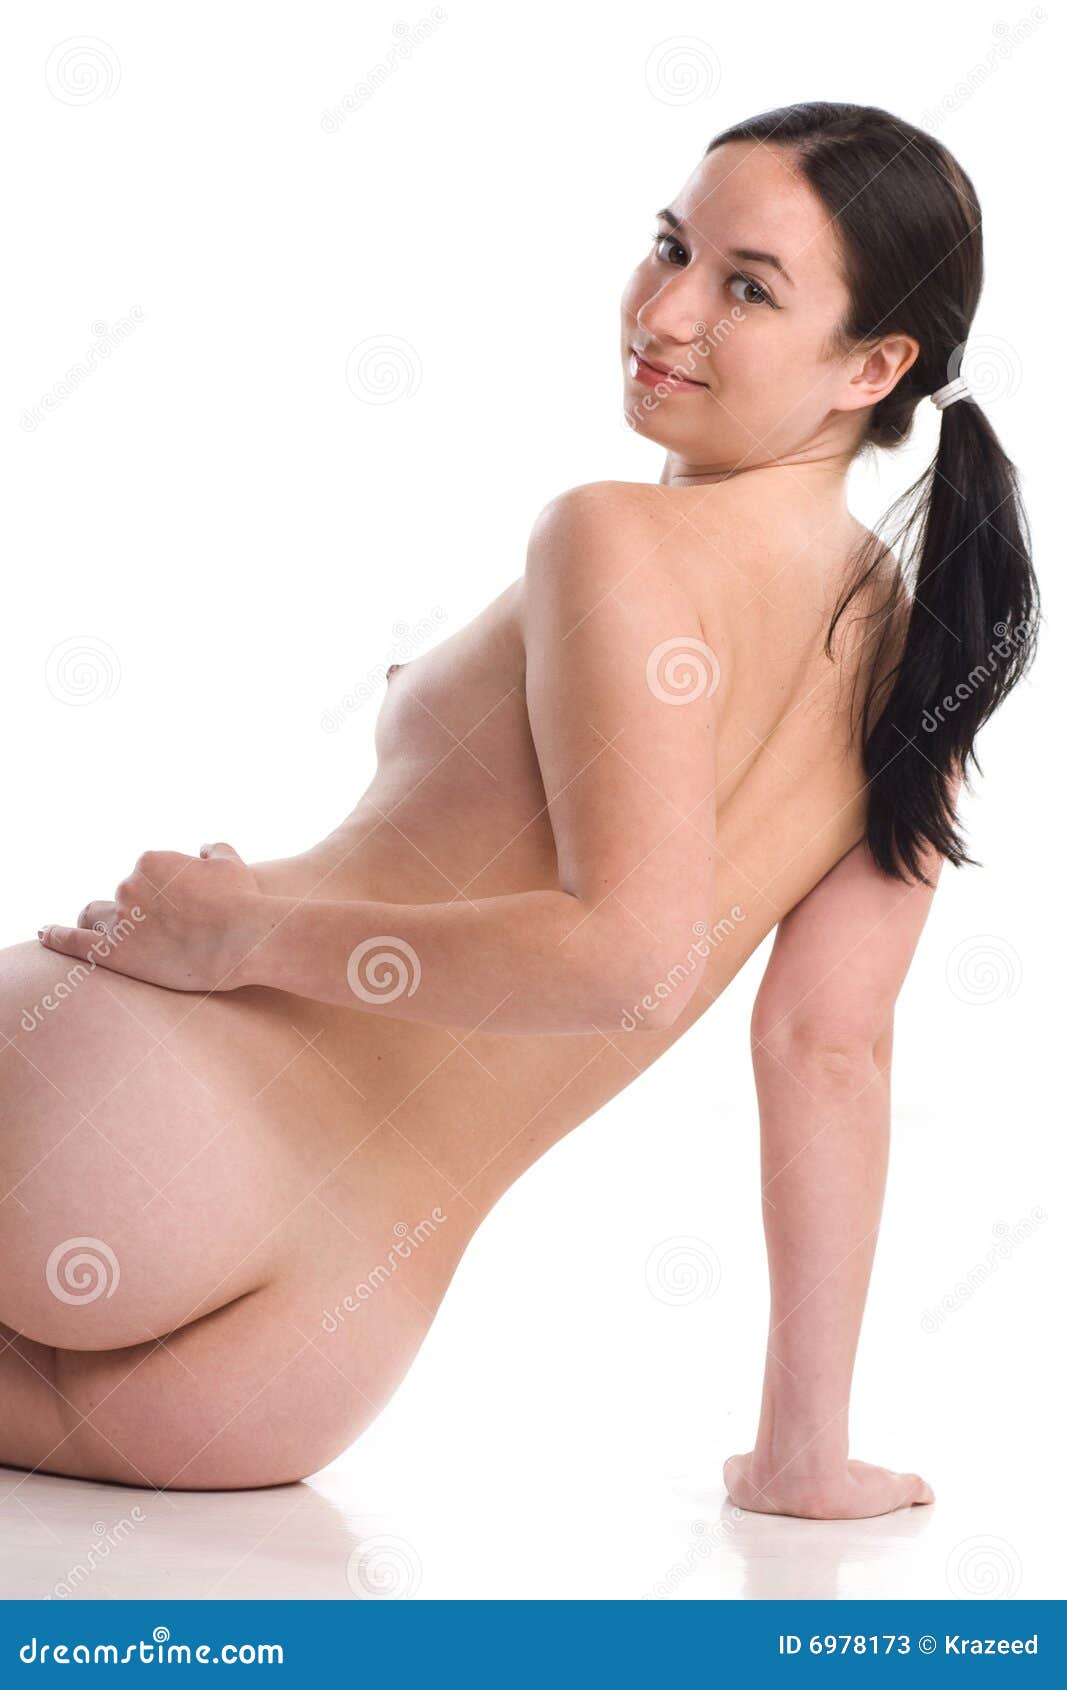 deepa ar add white girls nude photo